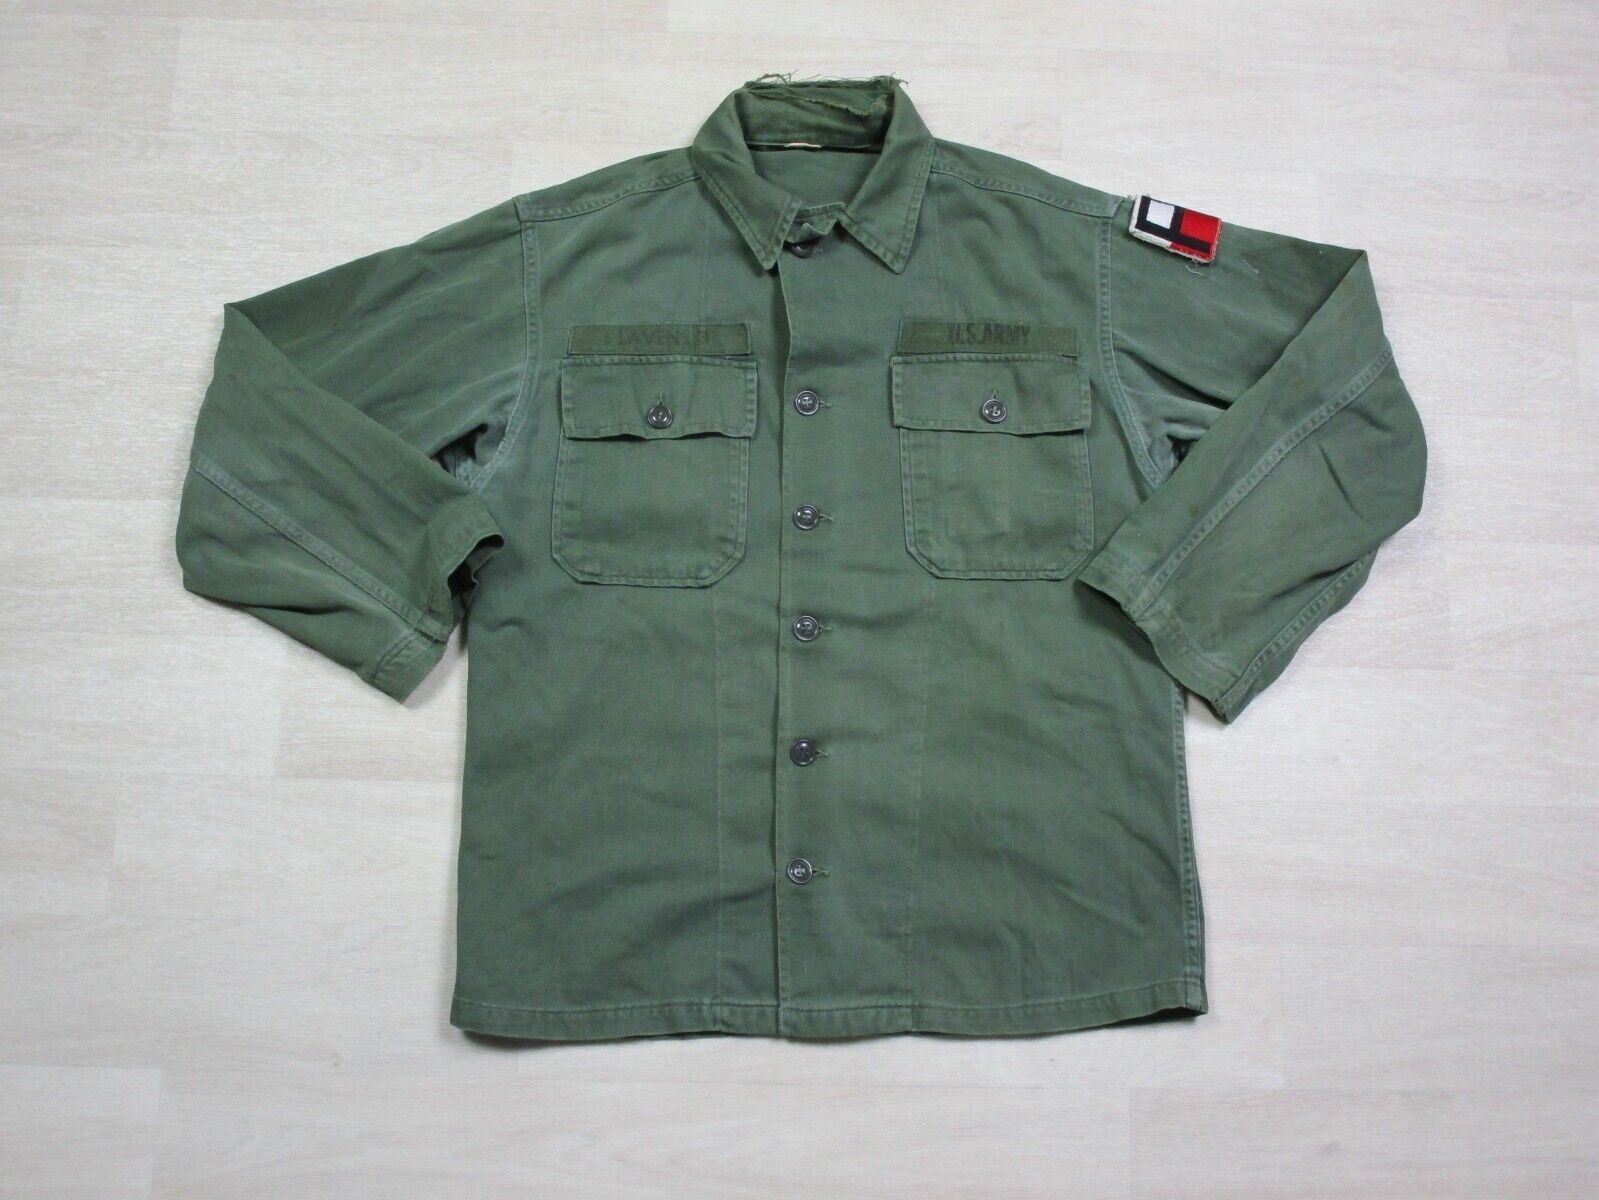 Vintage United States Army Military Shirt Size (L) Vietnam Era Field Shirt Patch